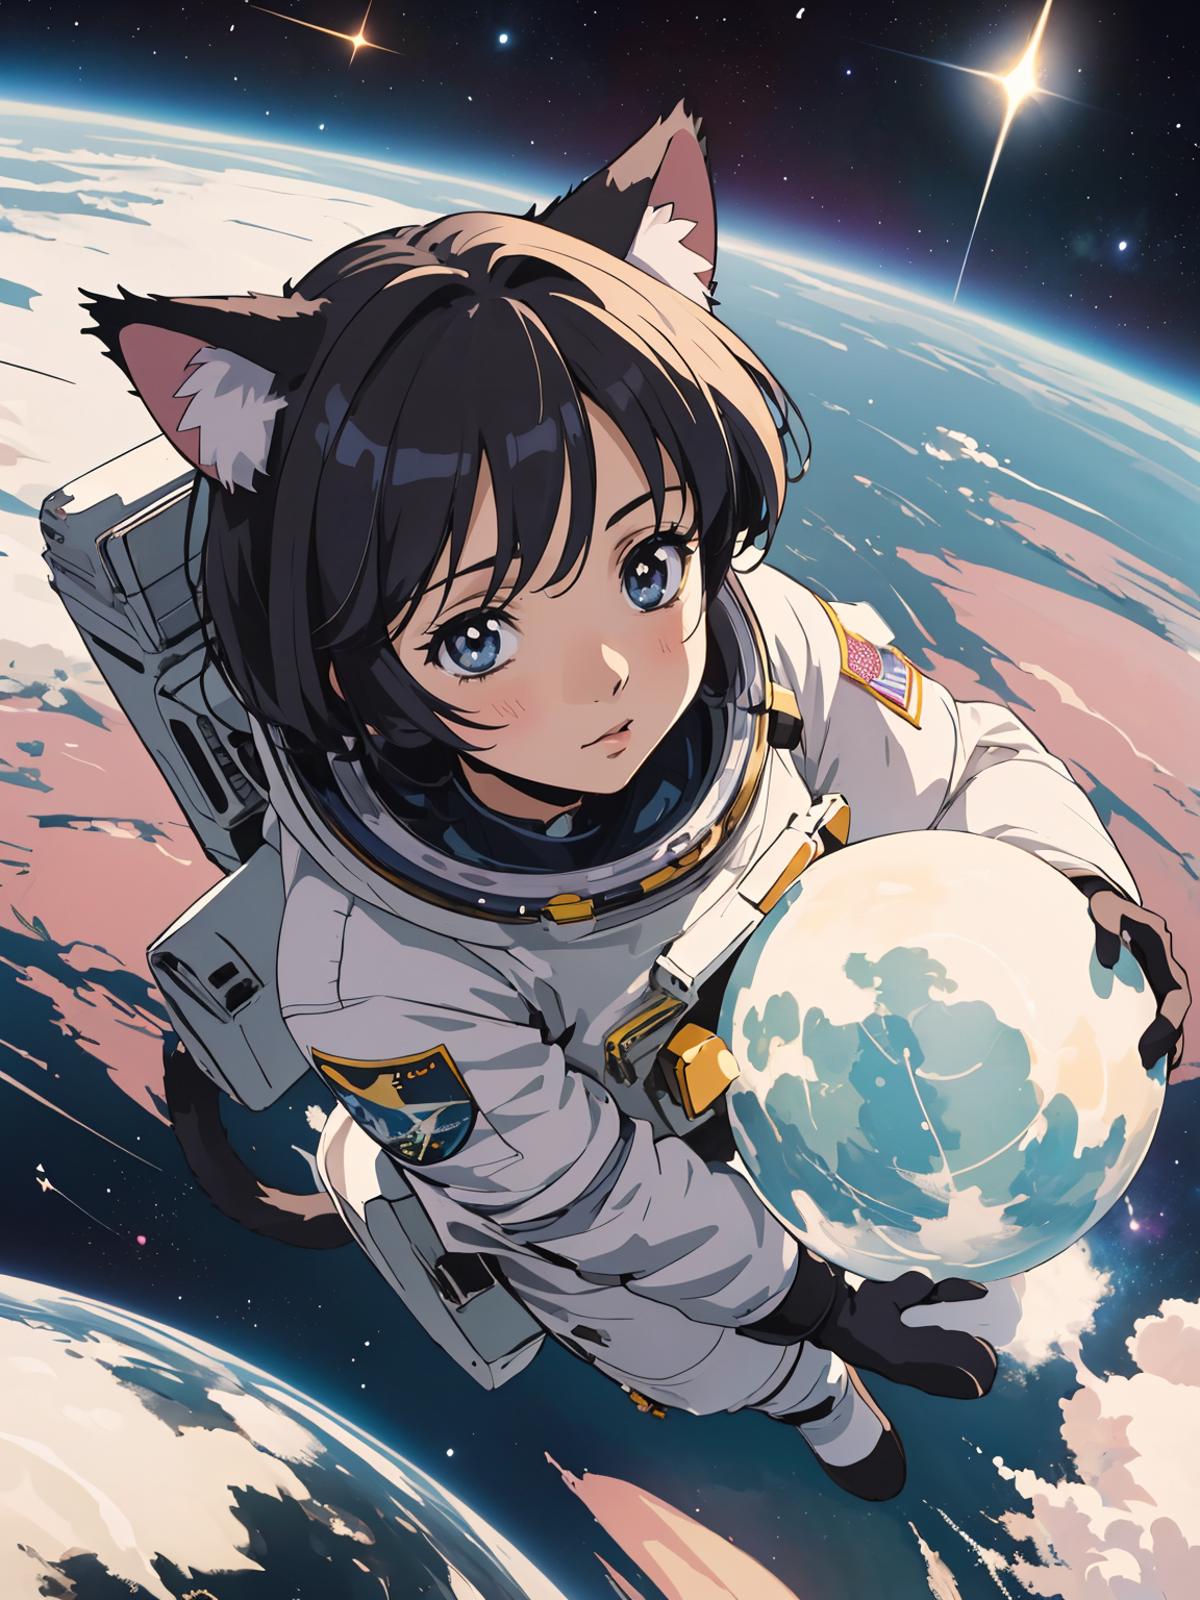 A Cute Anime Cat Astronaut Holding a Globe.